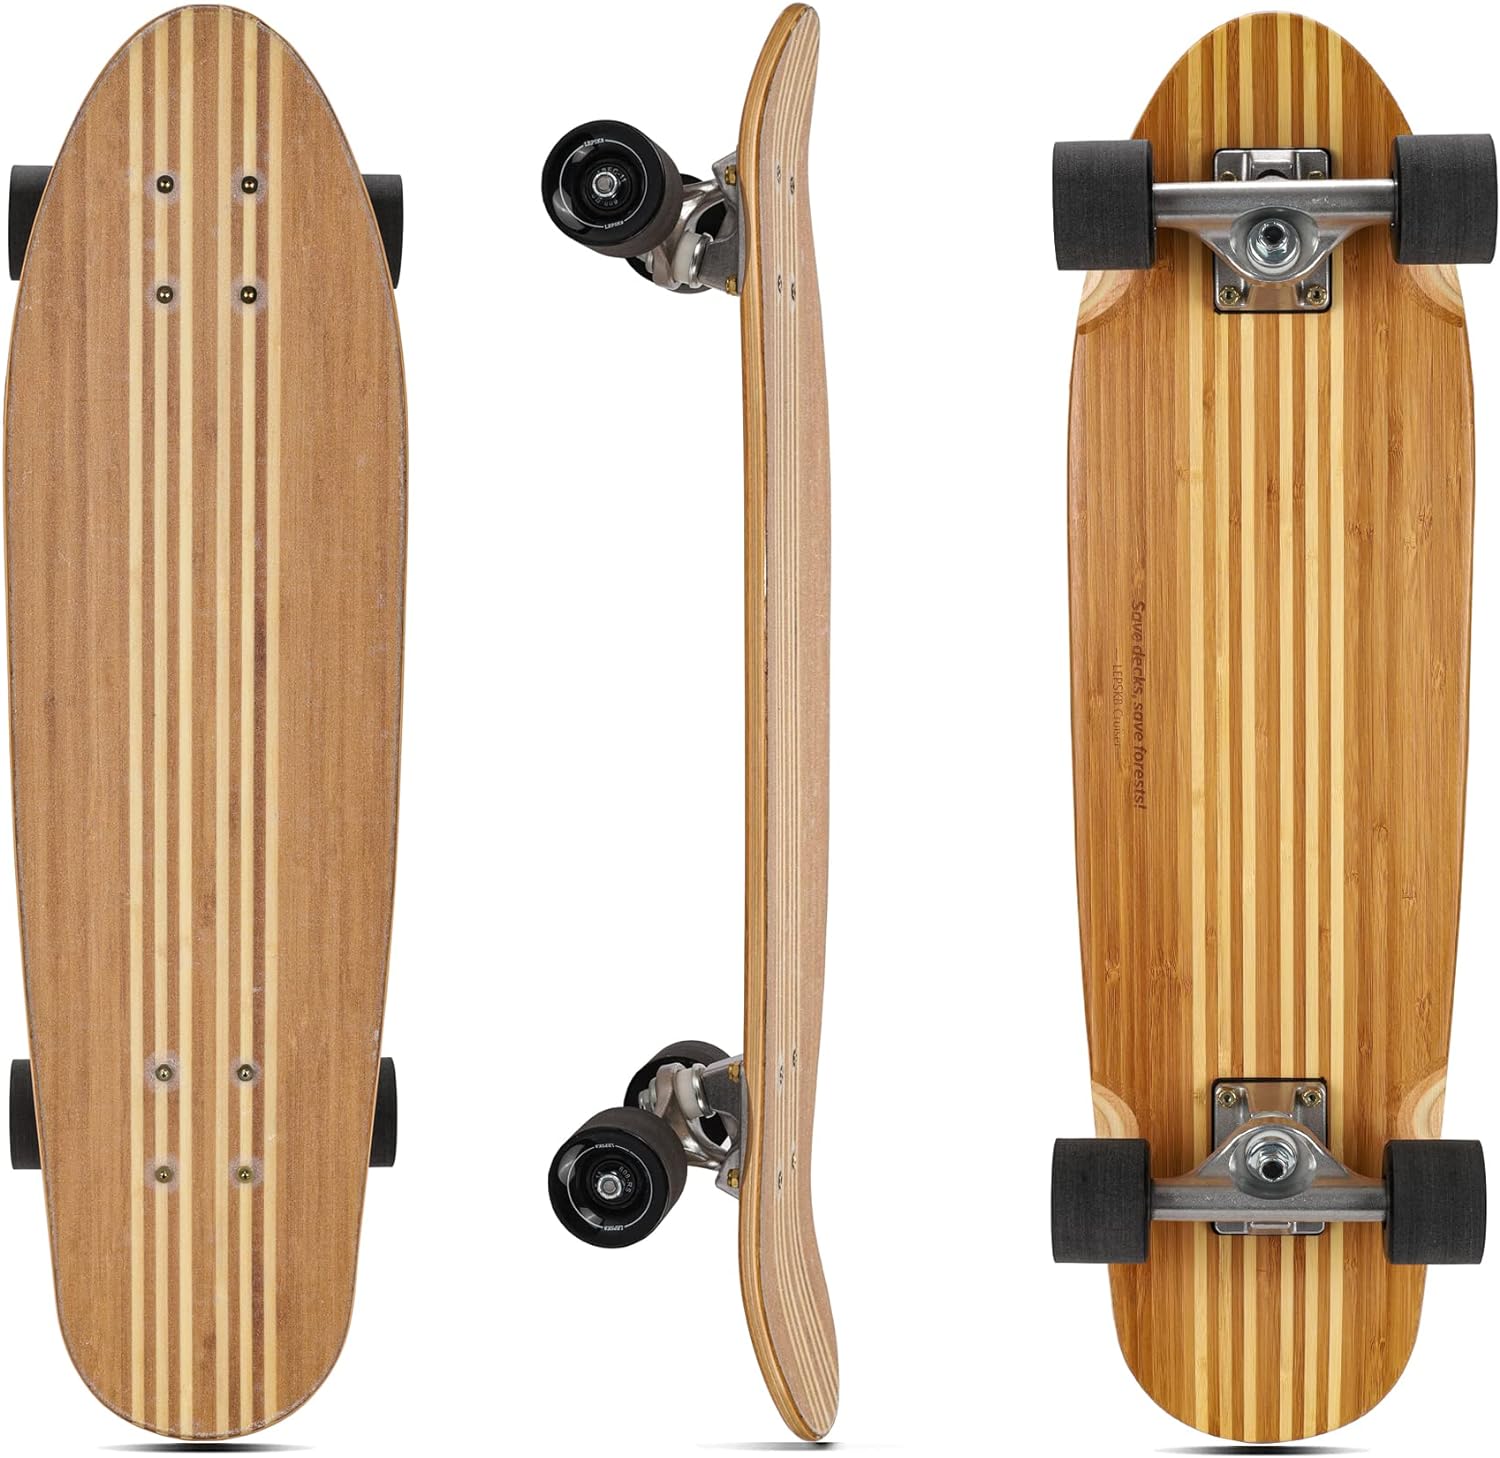 LEPSK8 Mini Cruiser Skateboard, Bamboo / Maple Hybrid Deck, (ABEC-11 Bearing, 60mm PU Wheel), 28 Complete Skateboard Cruiser Board - for Kids Boys Girls Teens Adults, Men and Women